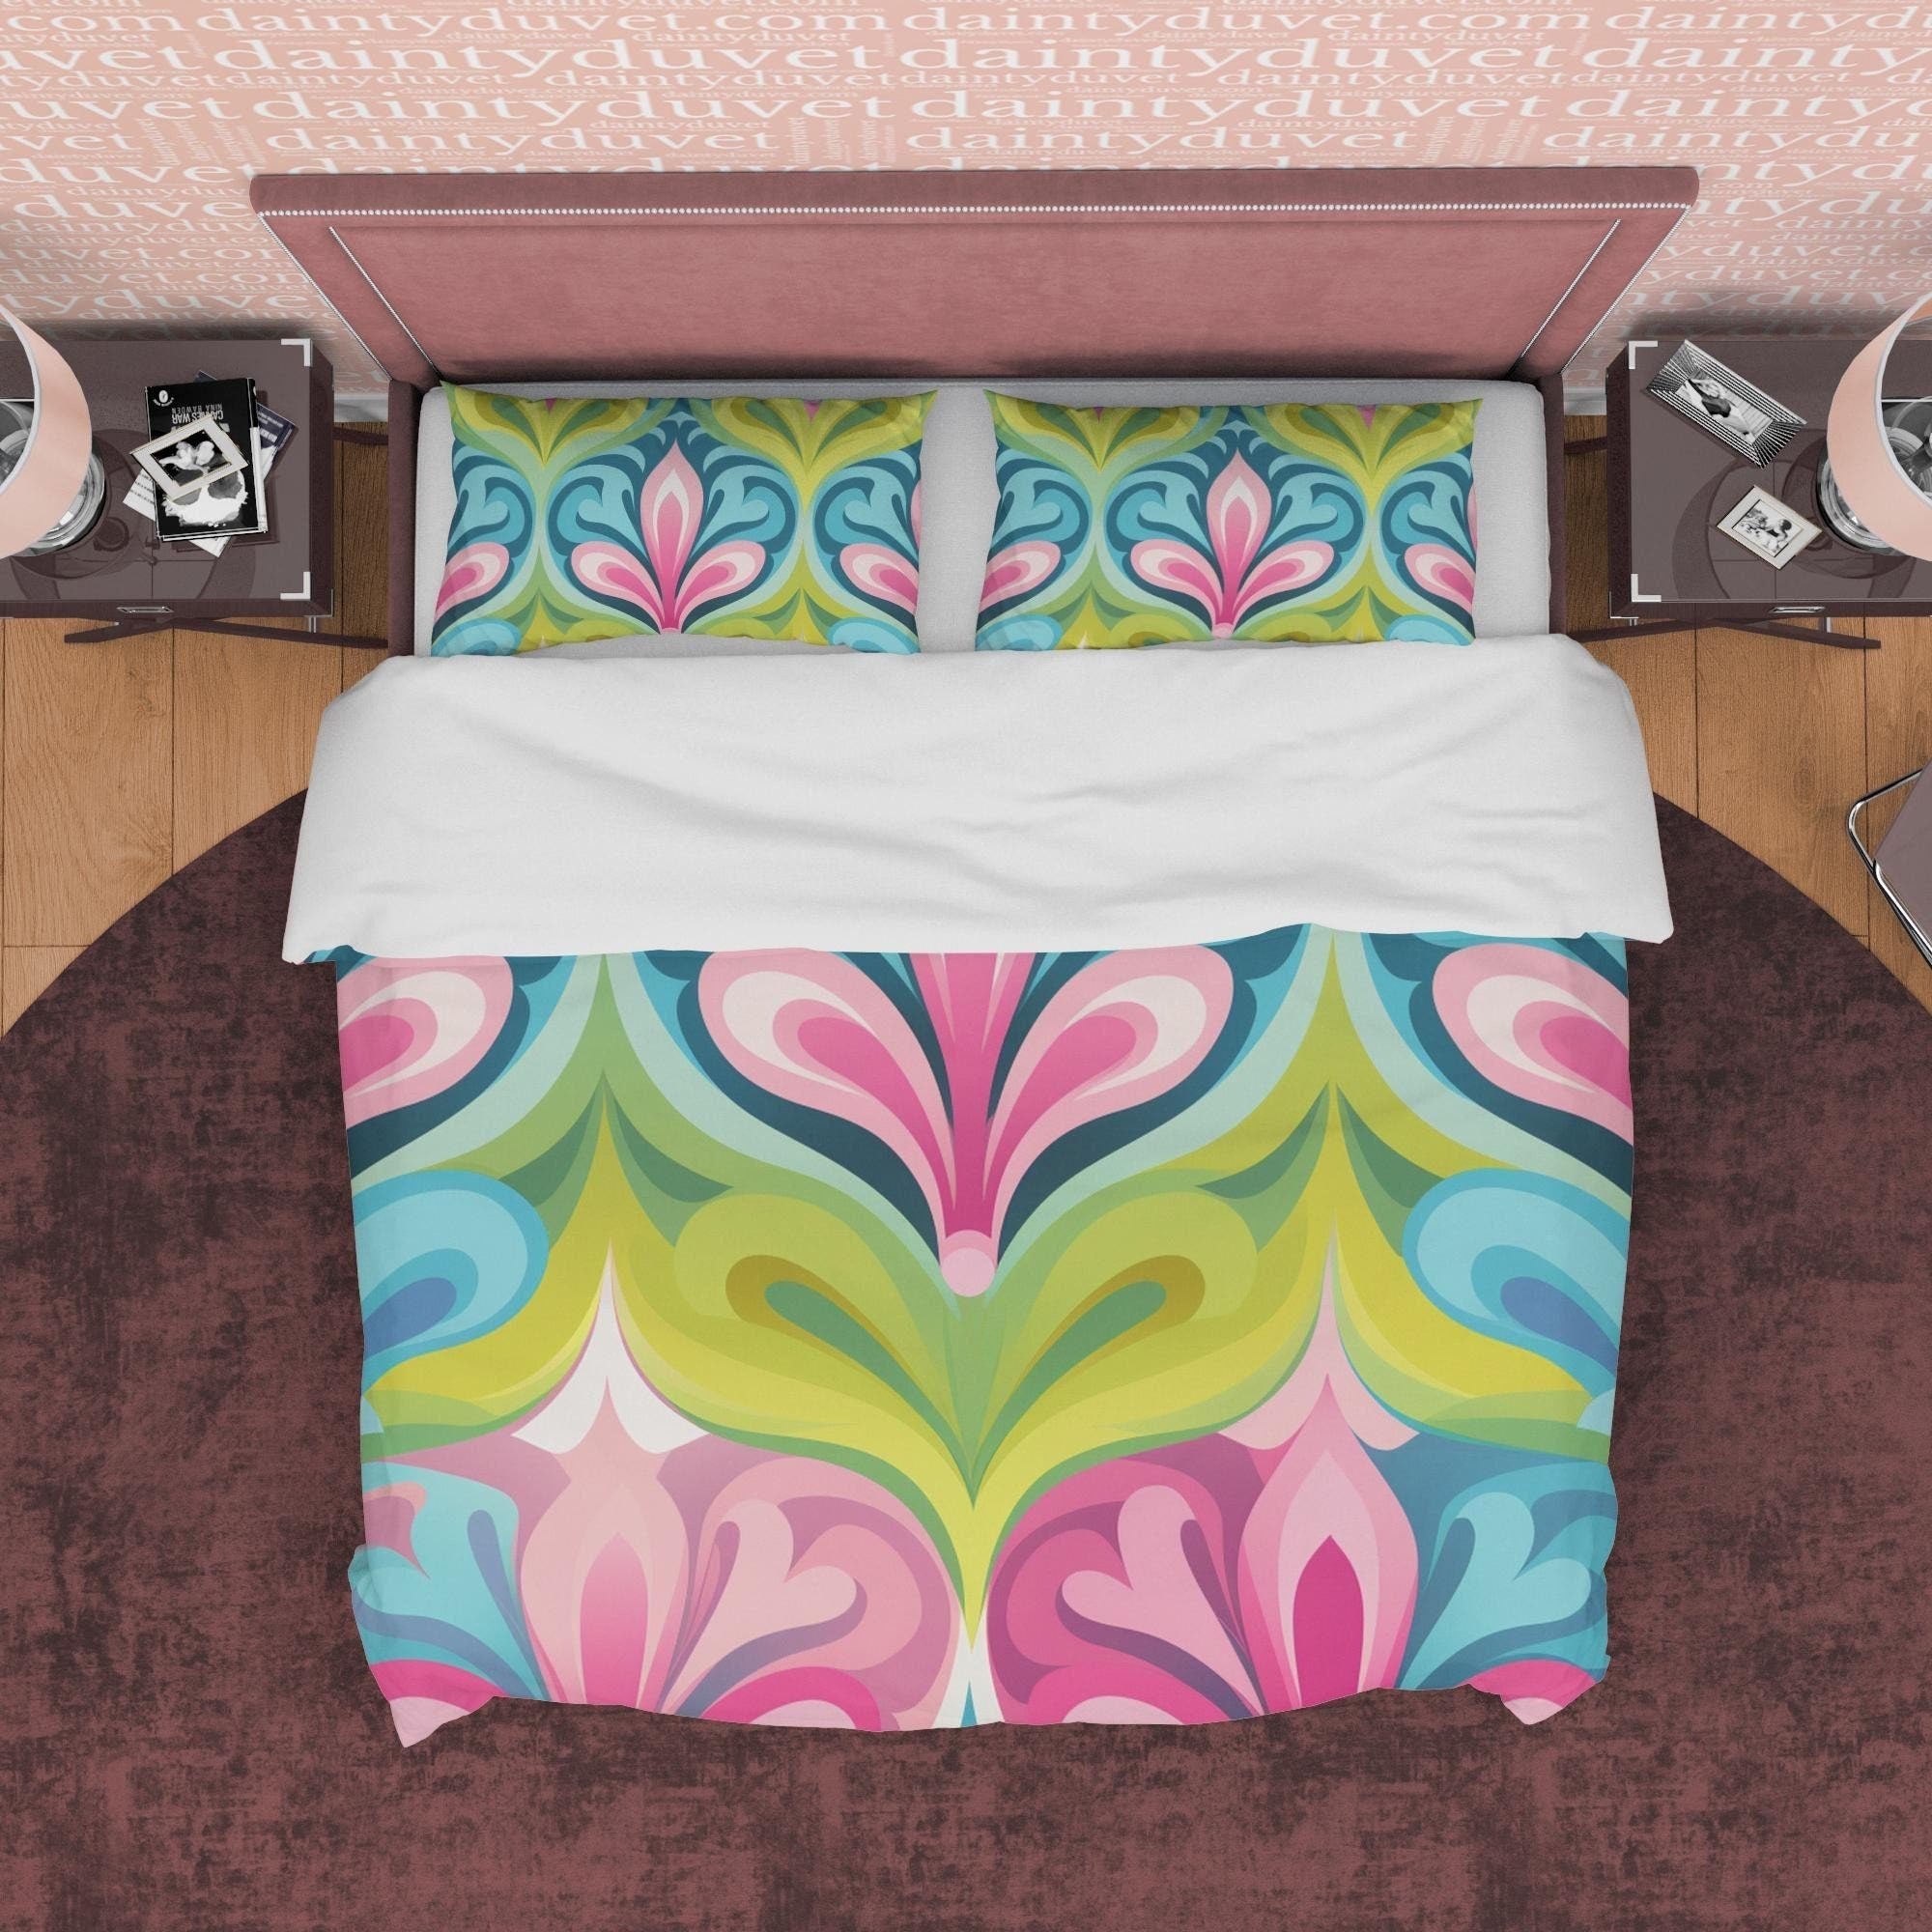 Boho Bedding Colorful Duvet Cover Bohemian Bedroom Set, Floral Quilt Cover, Aesthetic Bedspread, Tropic Bright Color Unique Room Decor